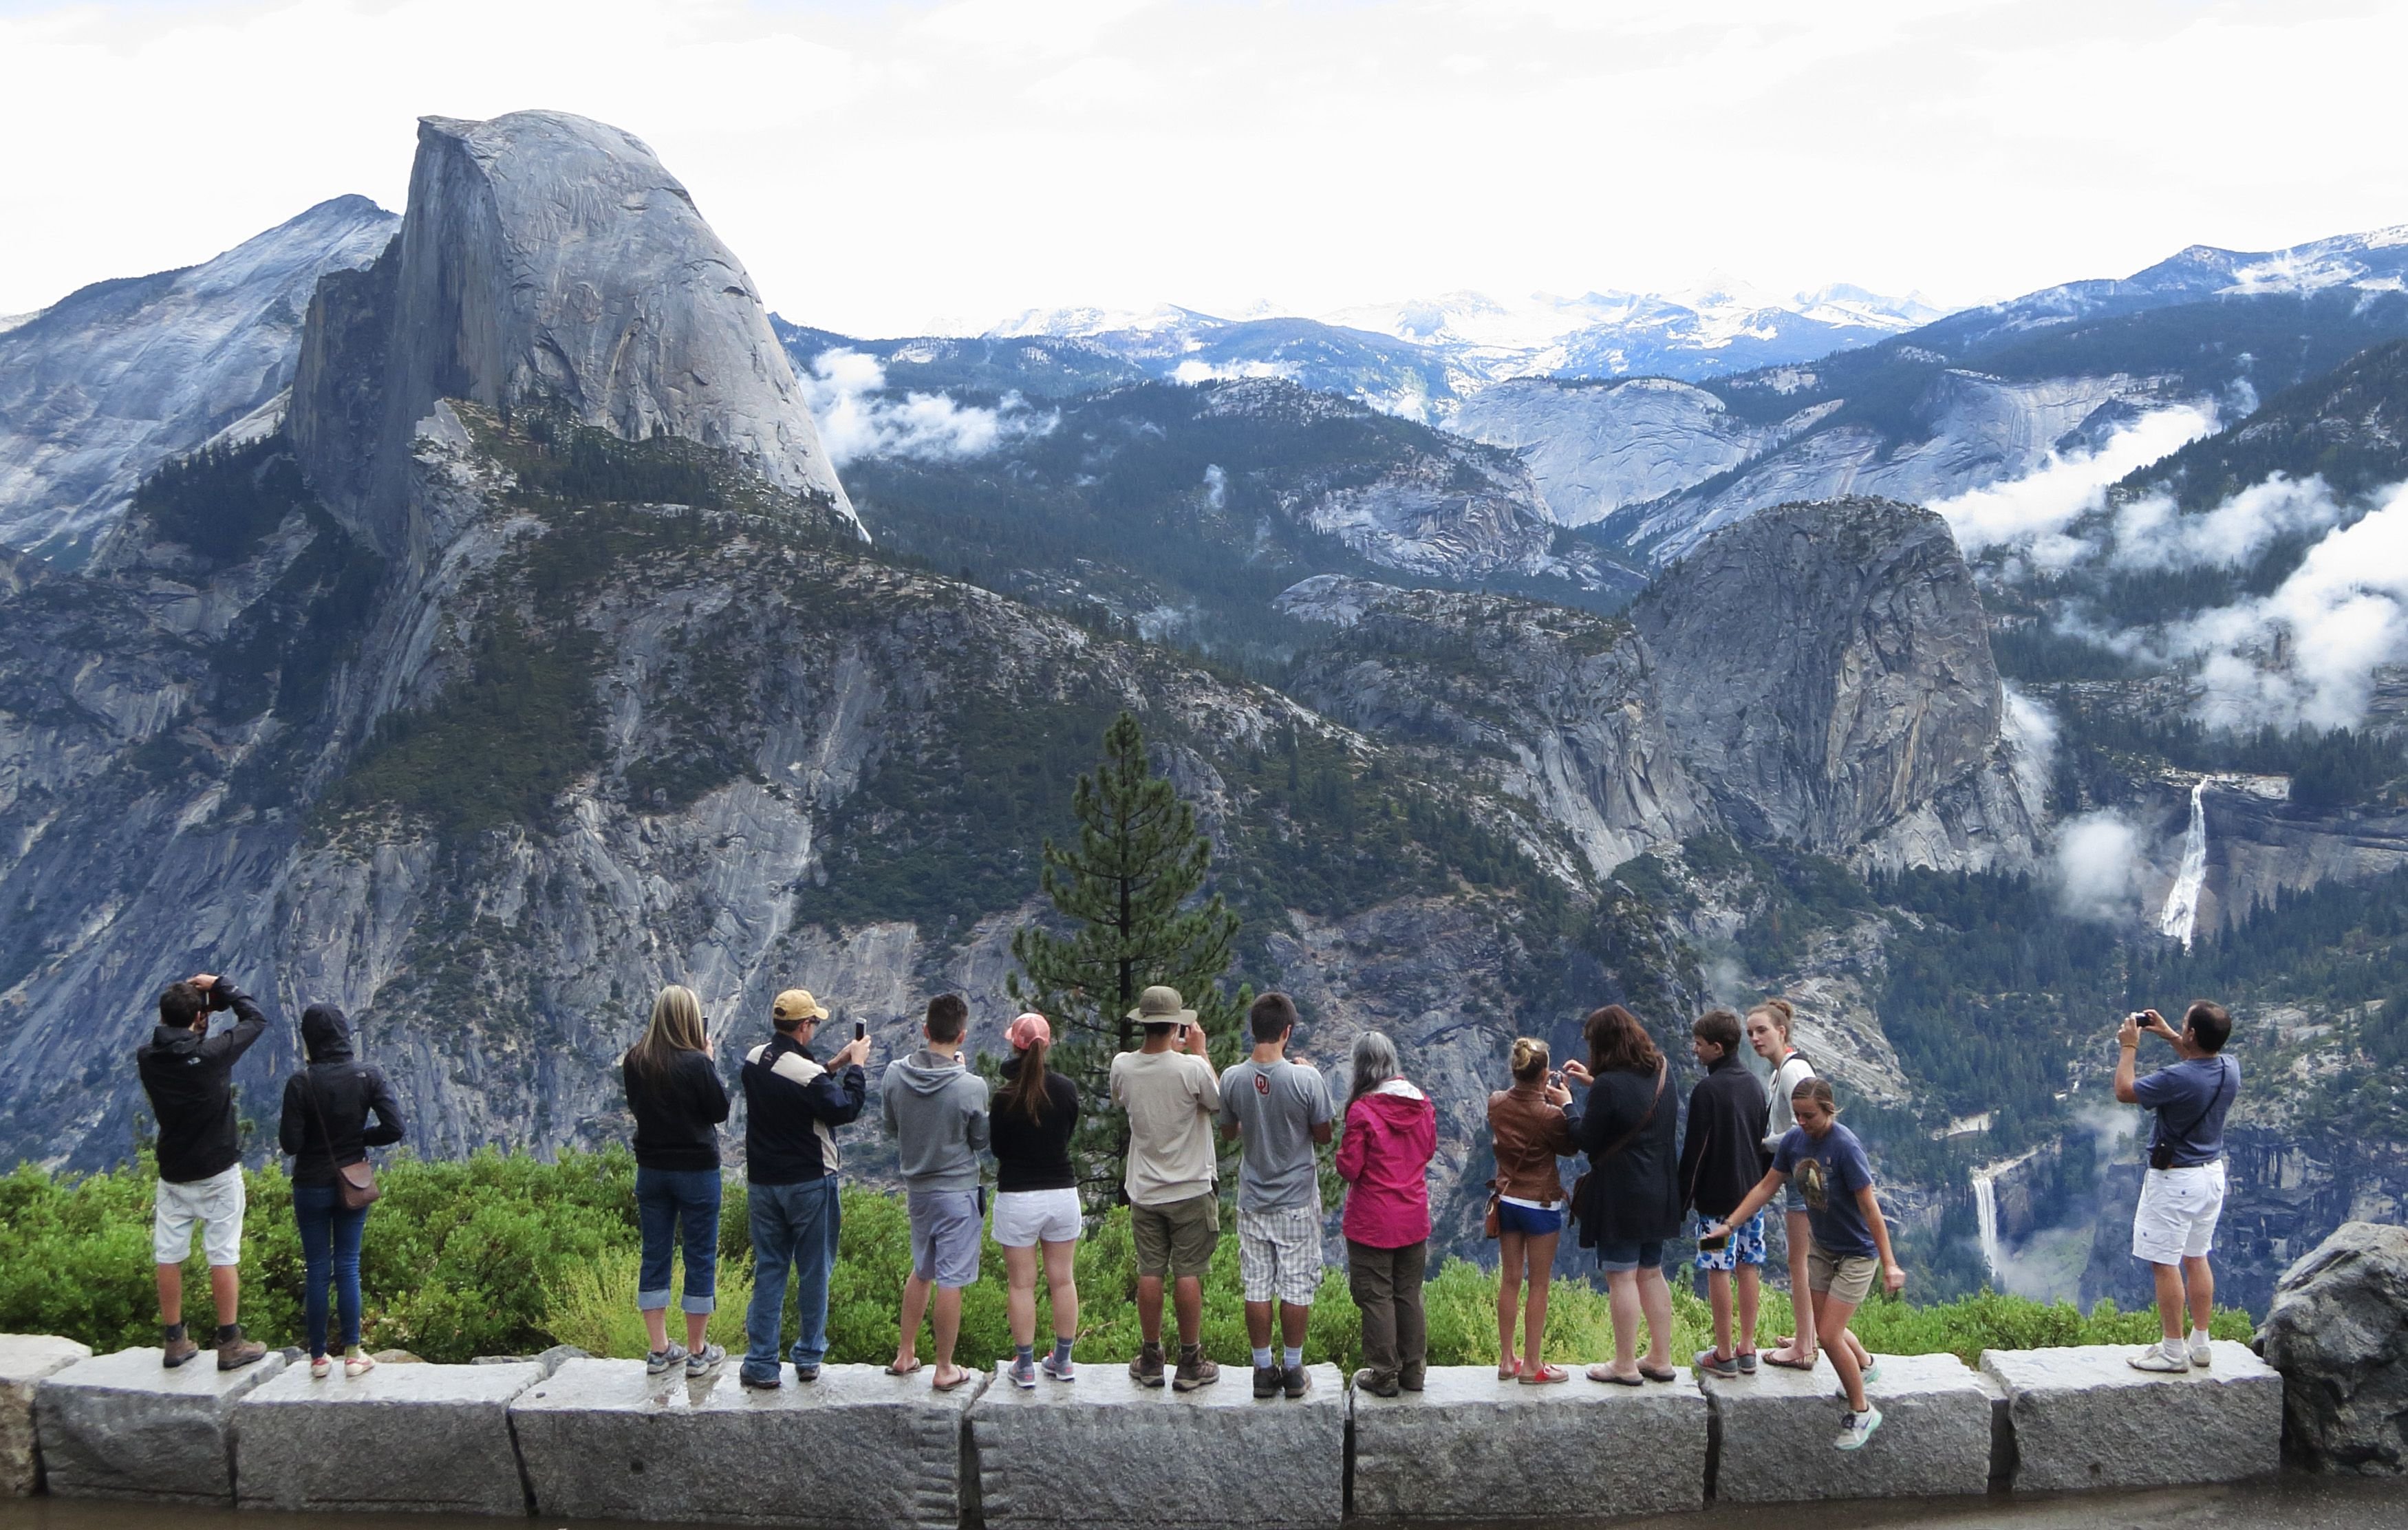 Нац парк Йосемити кемпинг. Глейшер парк туристы. Йосемити туристы. Туристы в национальном парке.